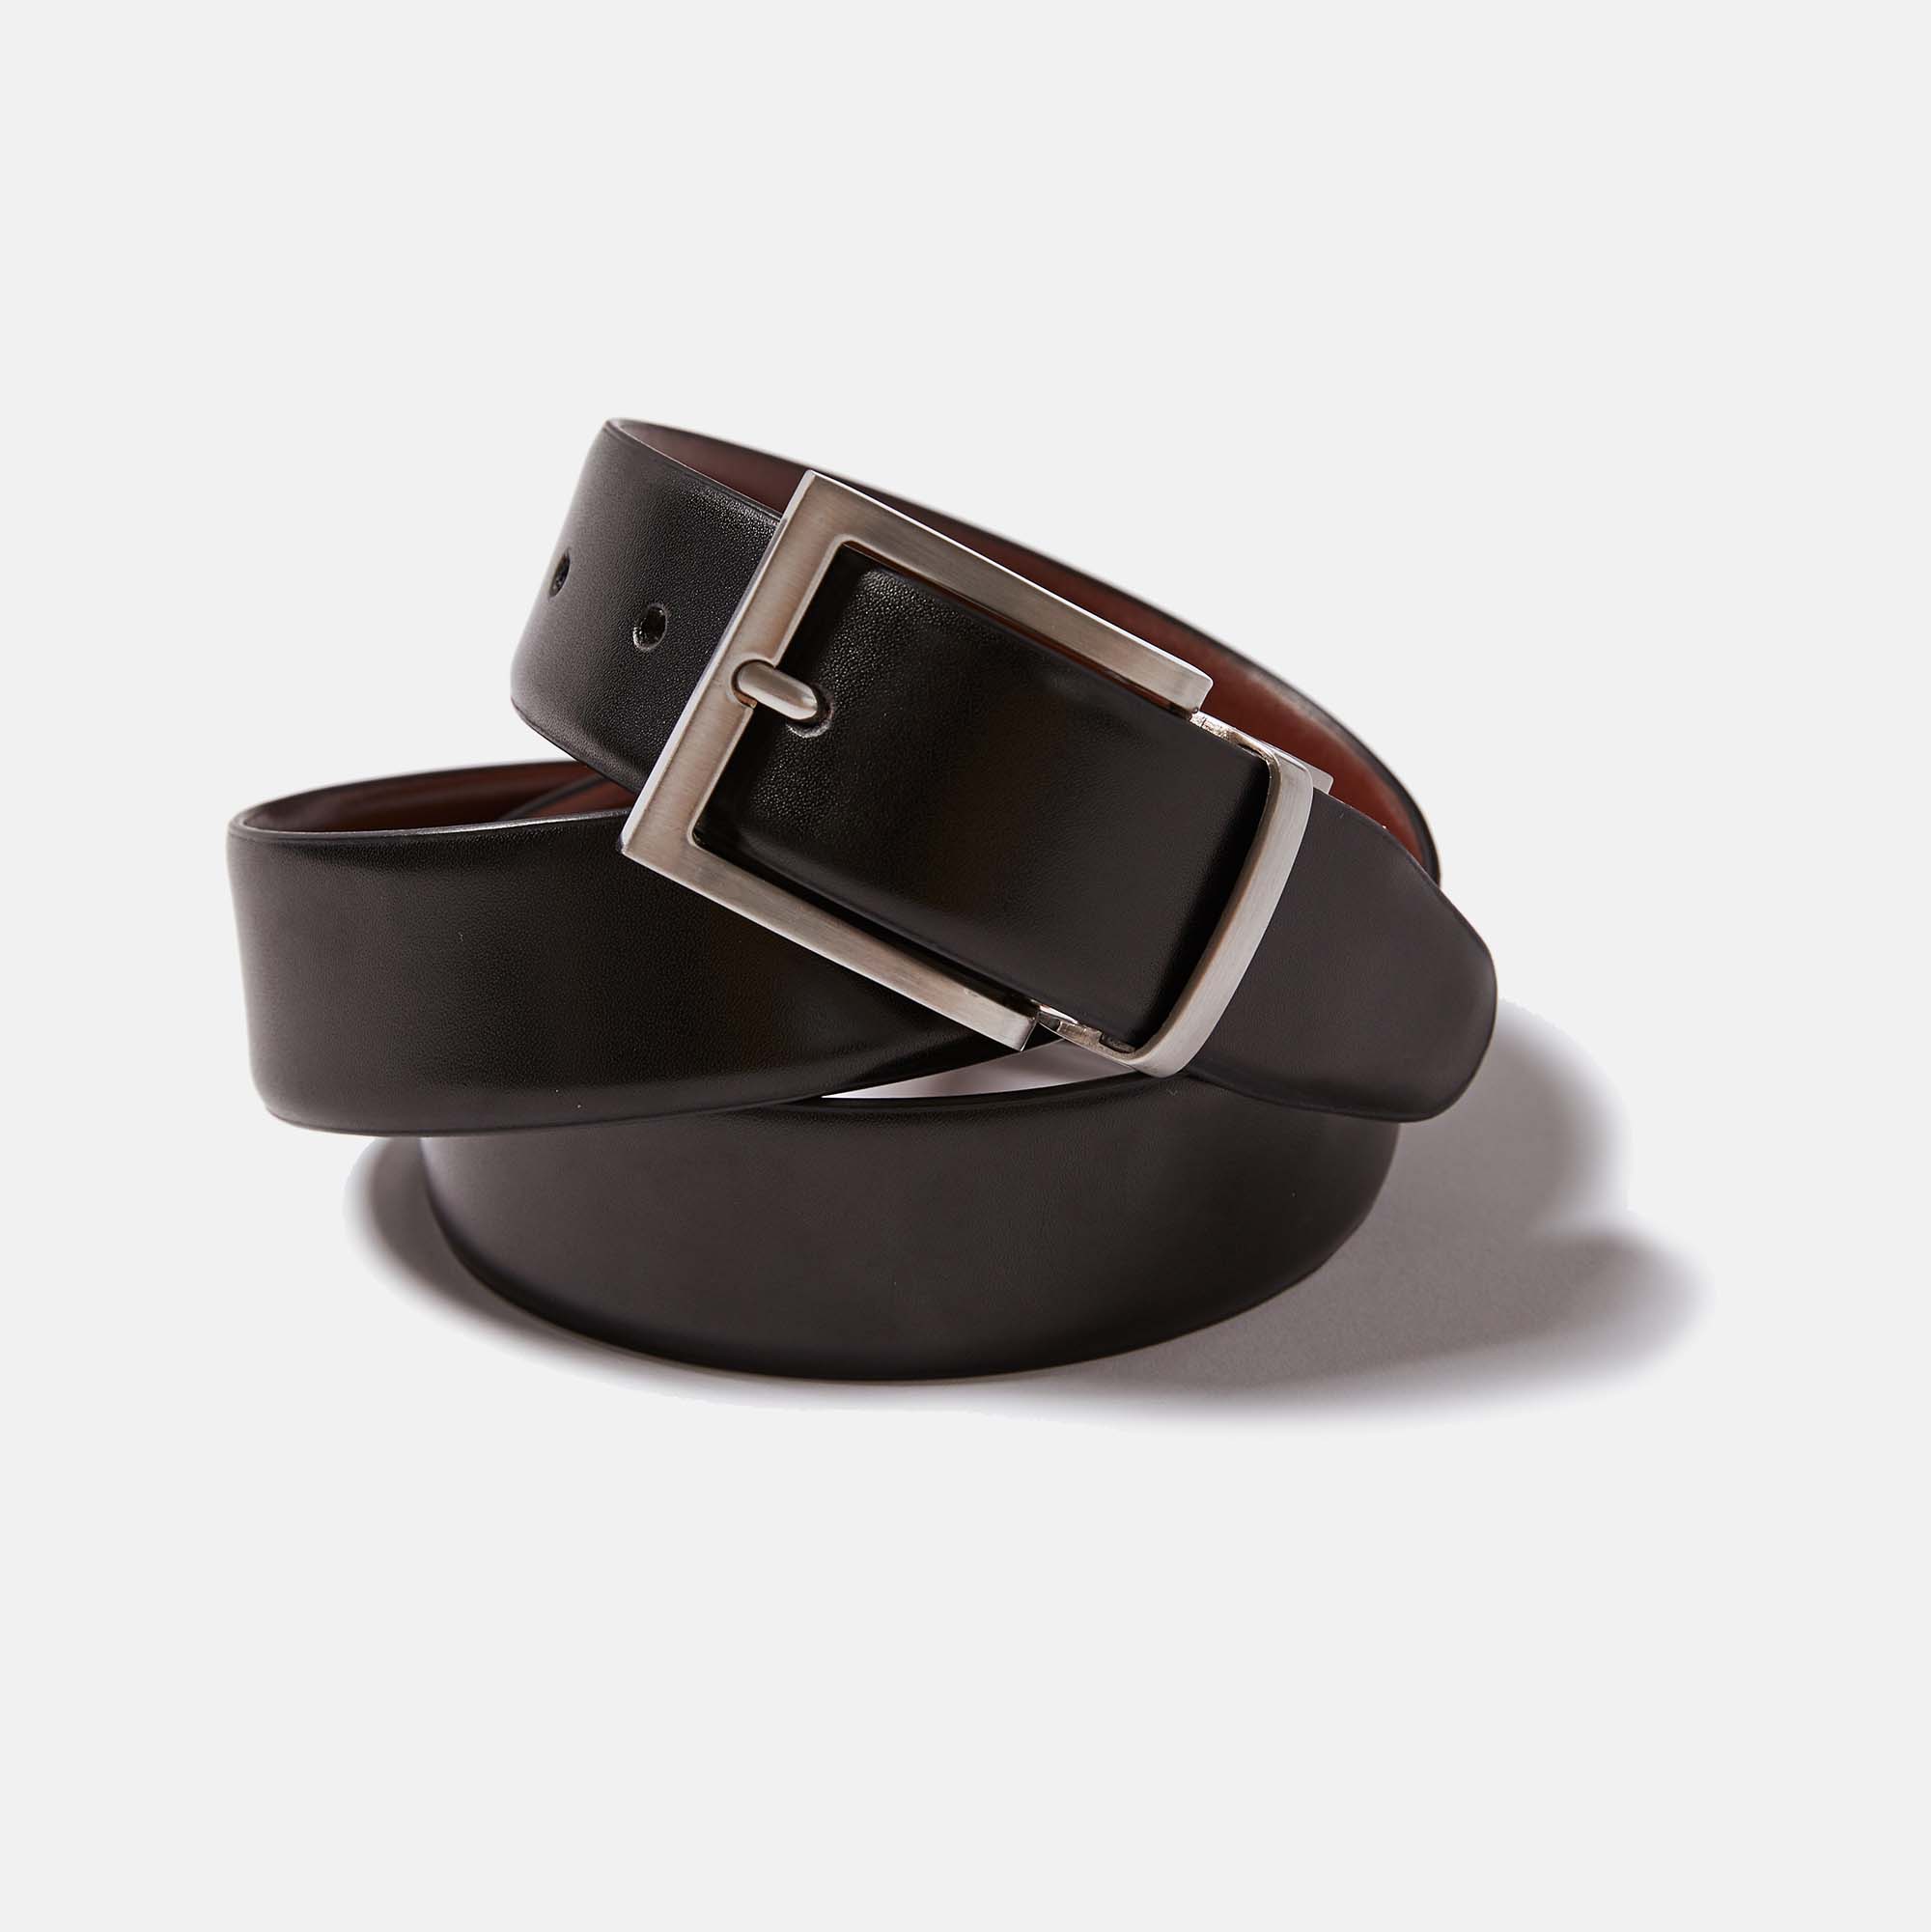 Reversible Leather Belt 39